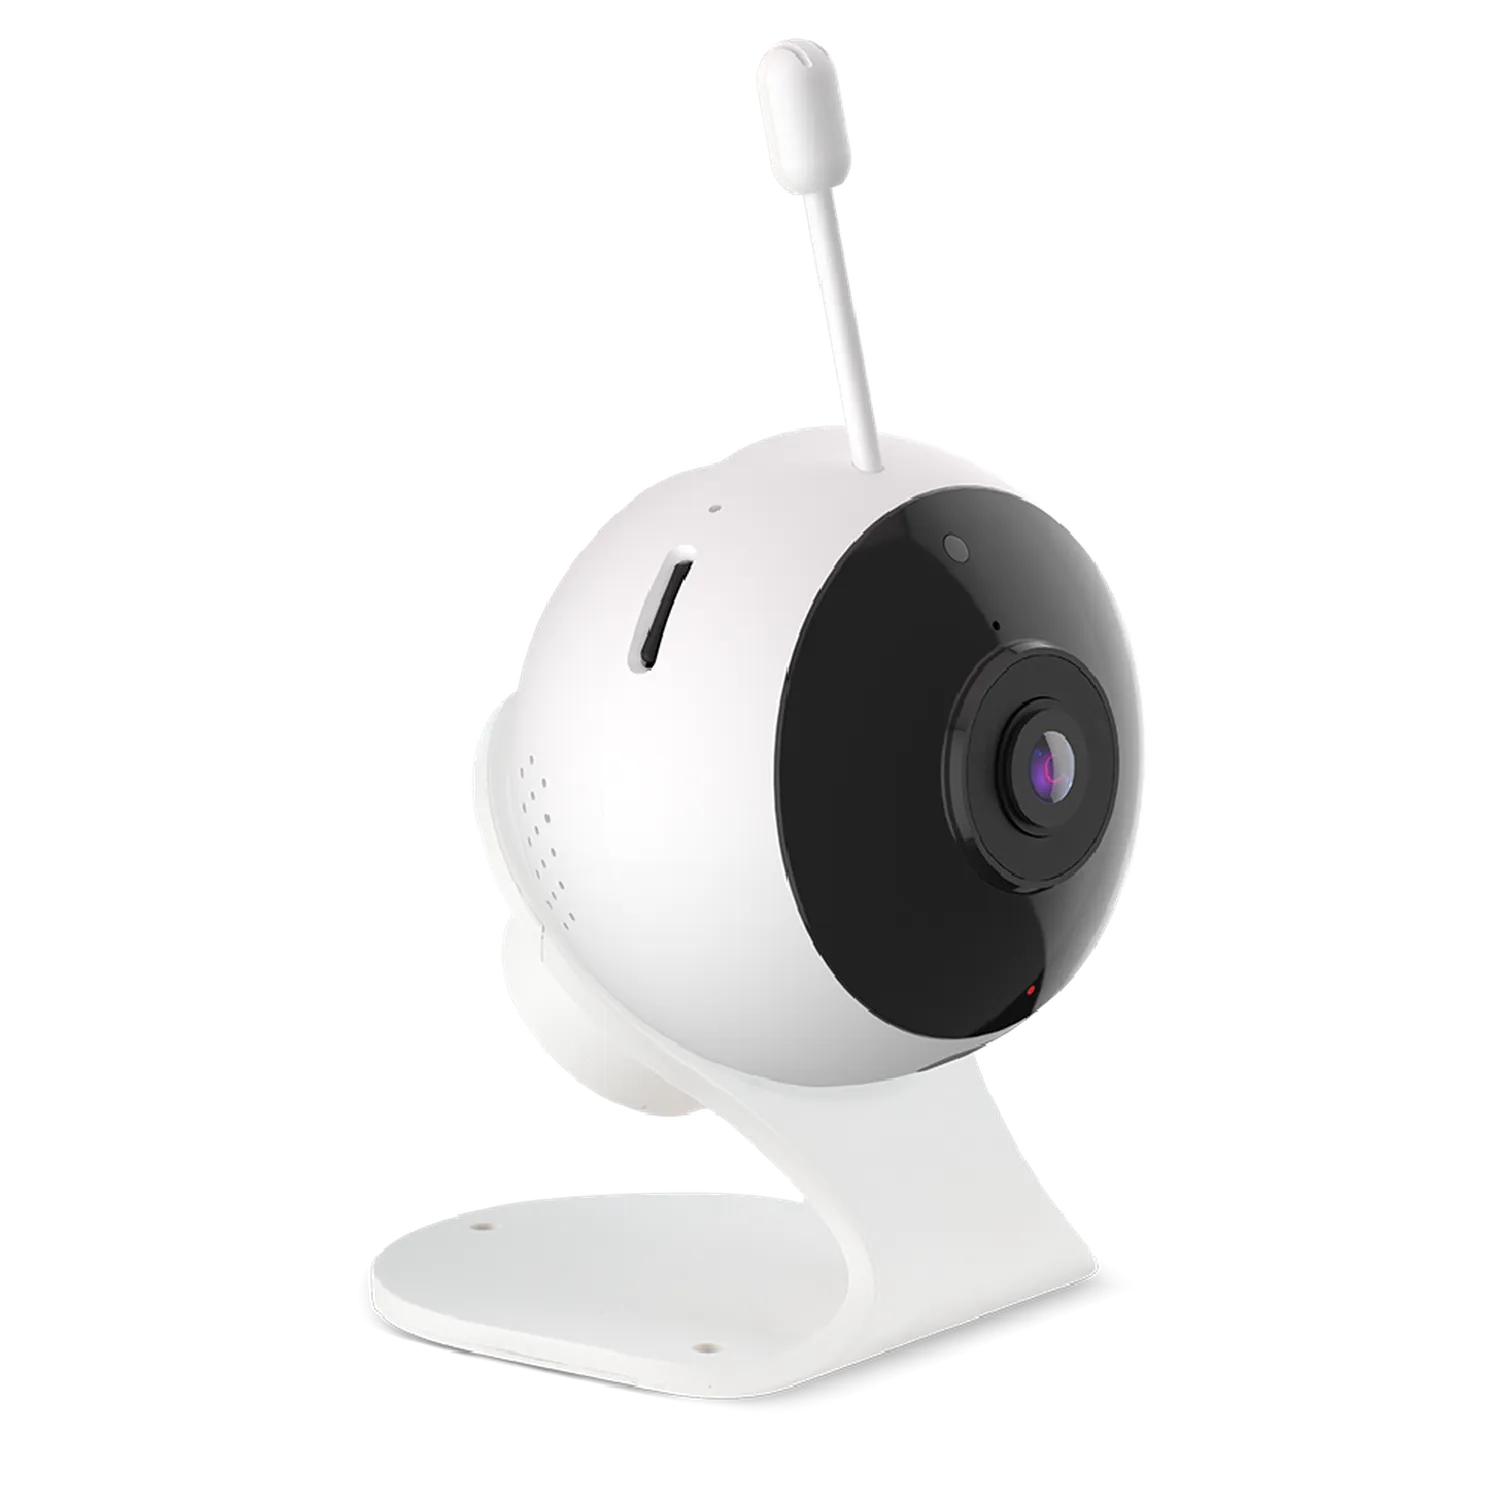 Детская камера Powerology Wi-Fi 1080P Full HD Монитор вашего ребенка#5